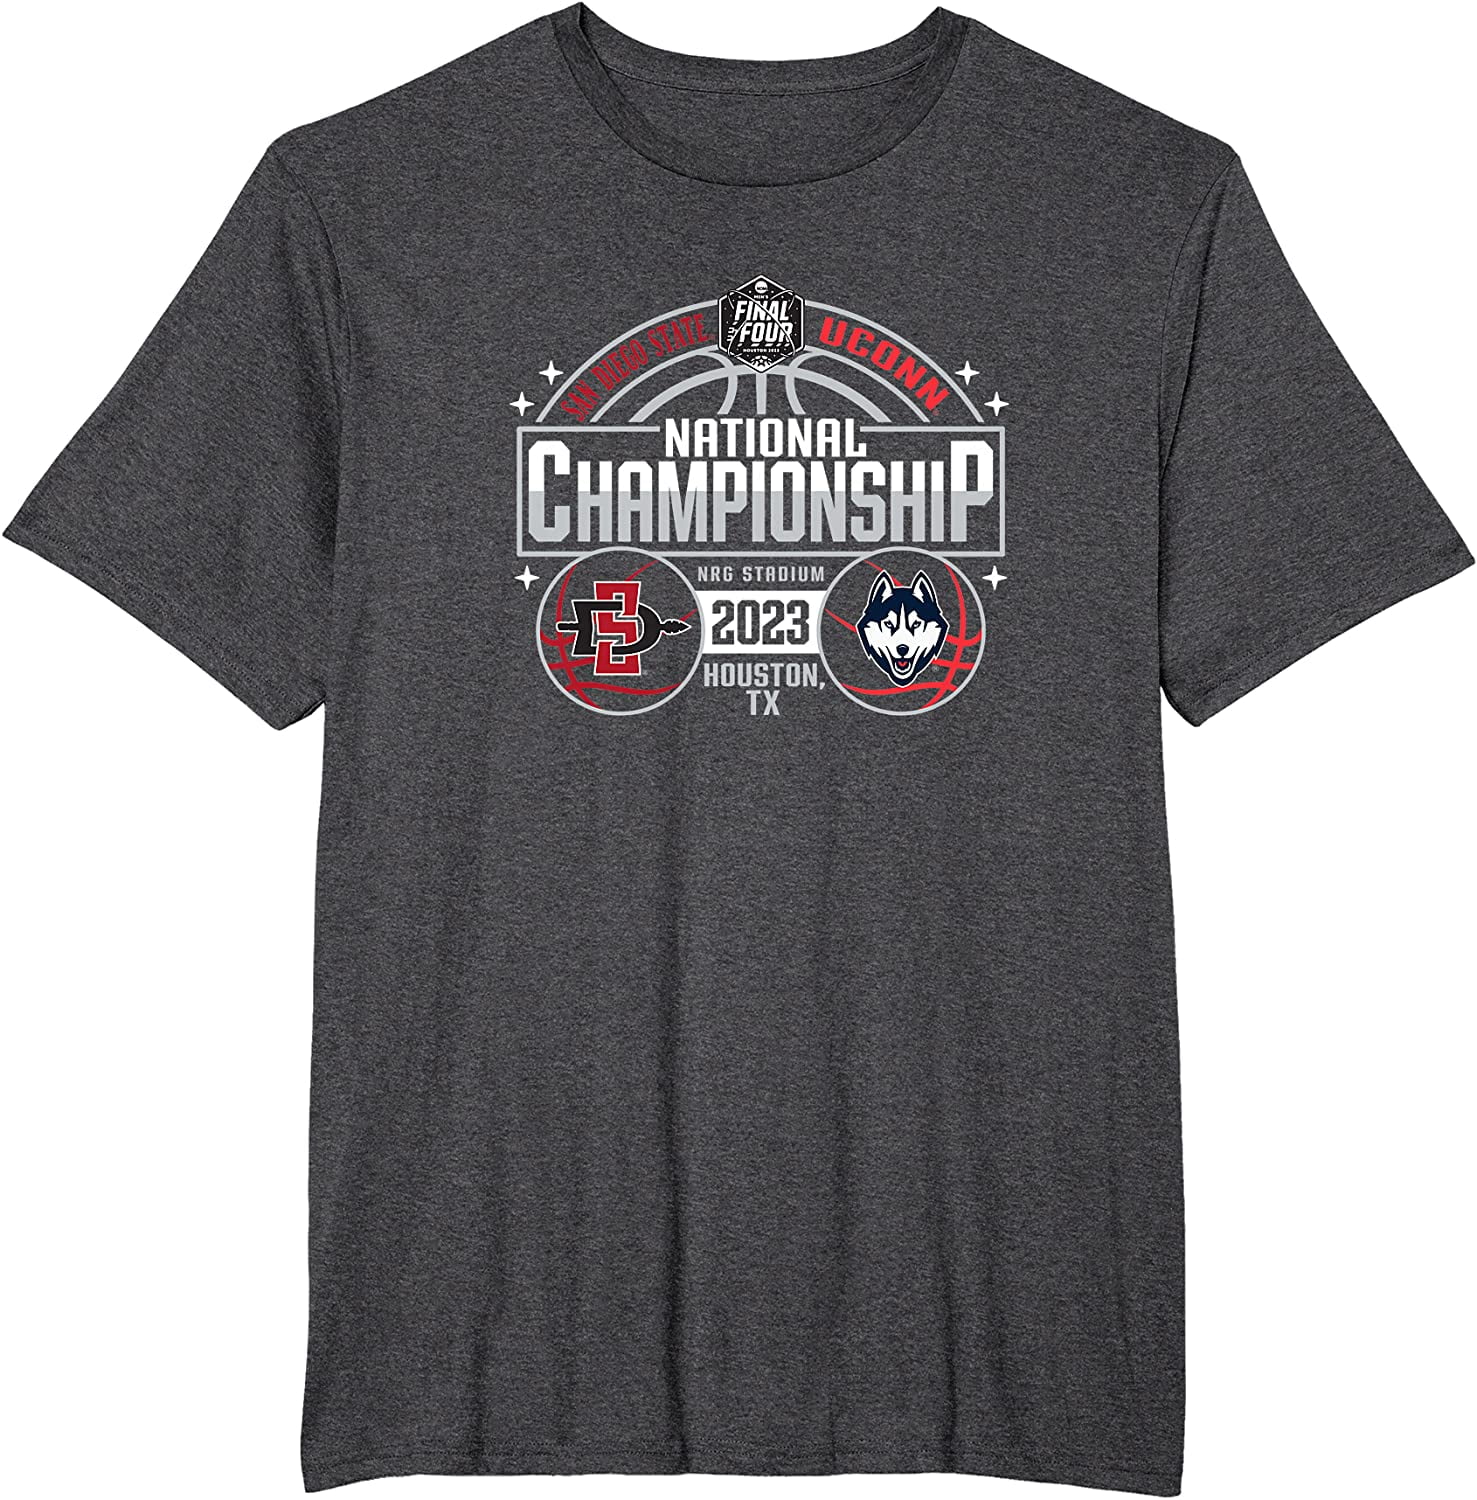 SD-SU-vs-Uco-nn National Championship 2023 Basketball T-Shirt - Walmart.com